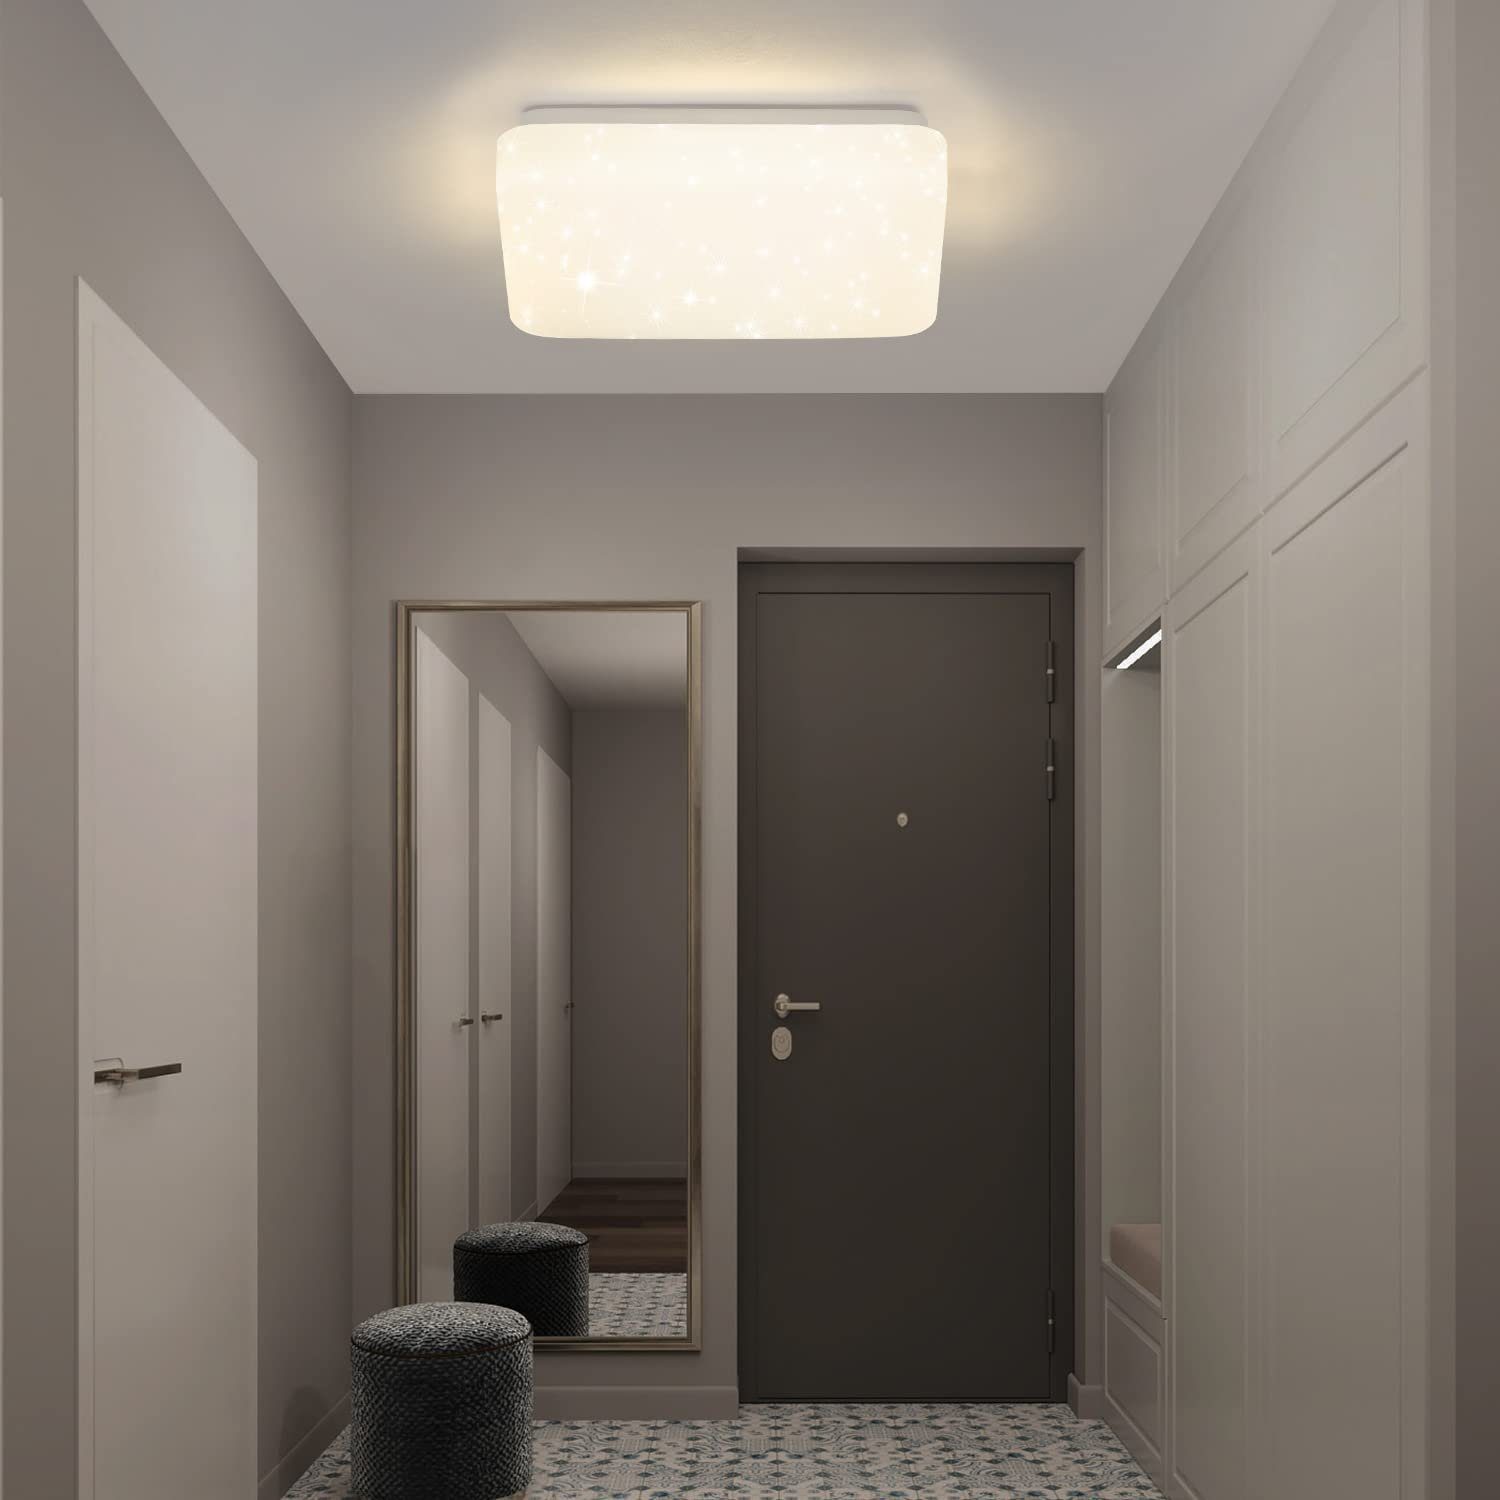 integriert, ZMH LED 4000K klein Schlafzimmerlampe flach LED Modern, Deckenleuchte Sternenhimmel fest